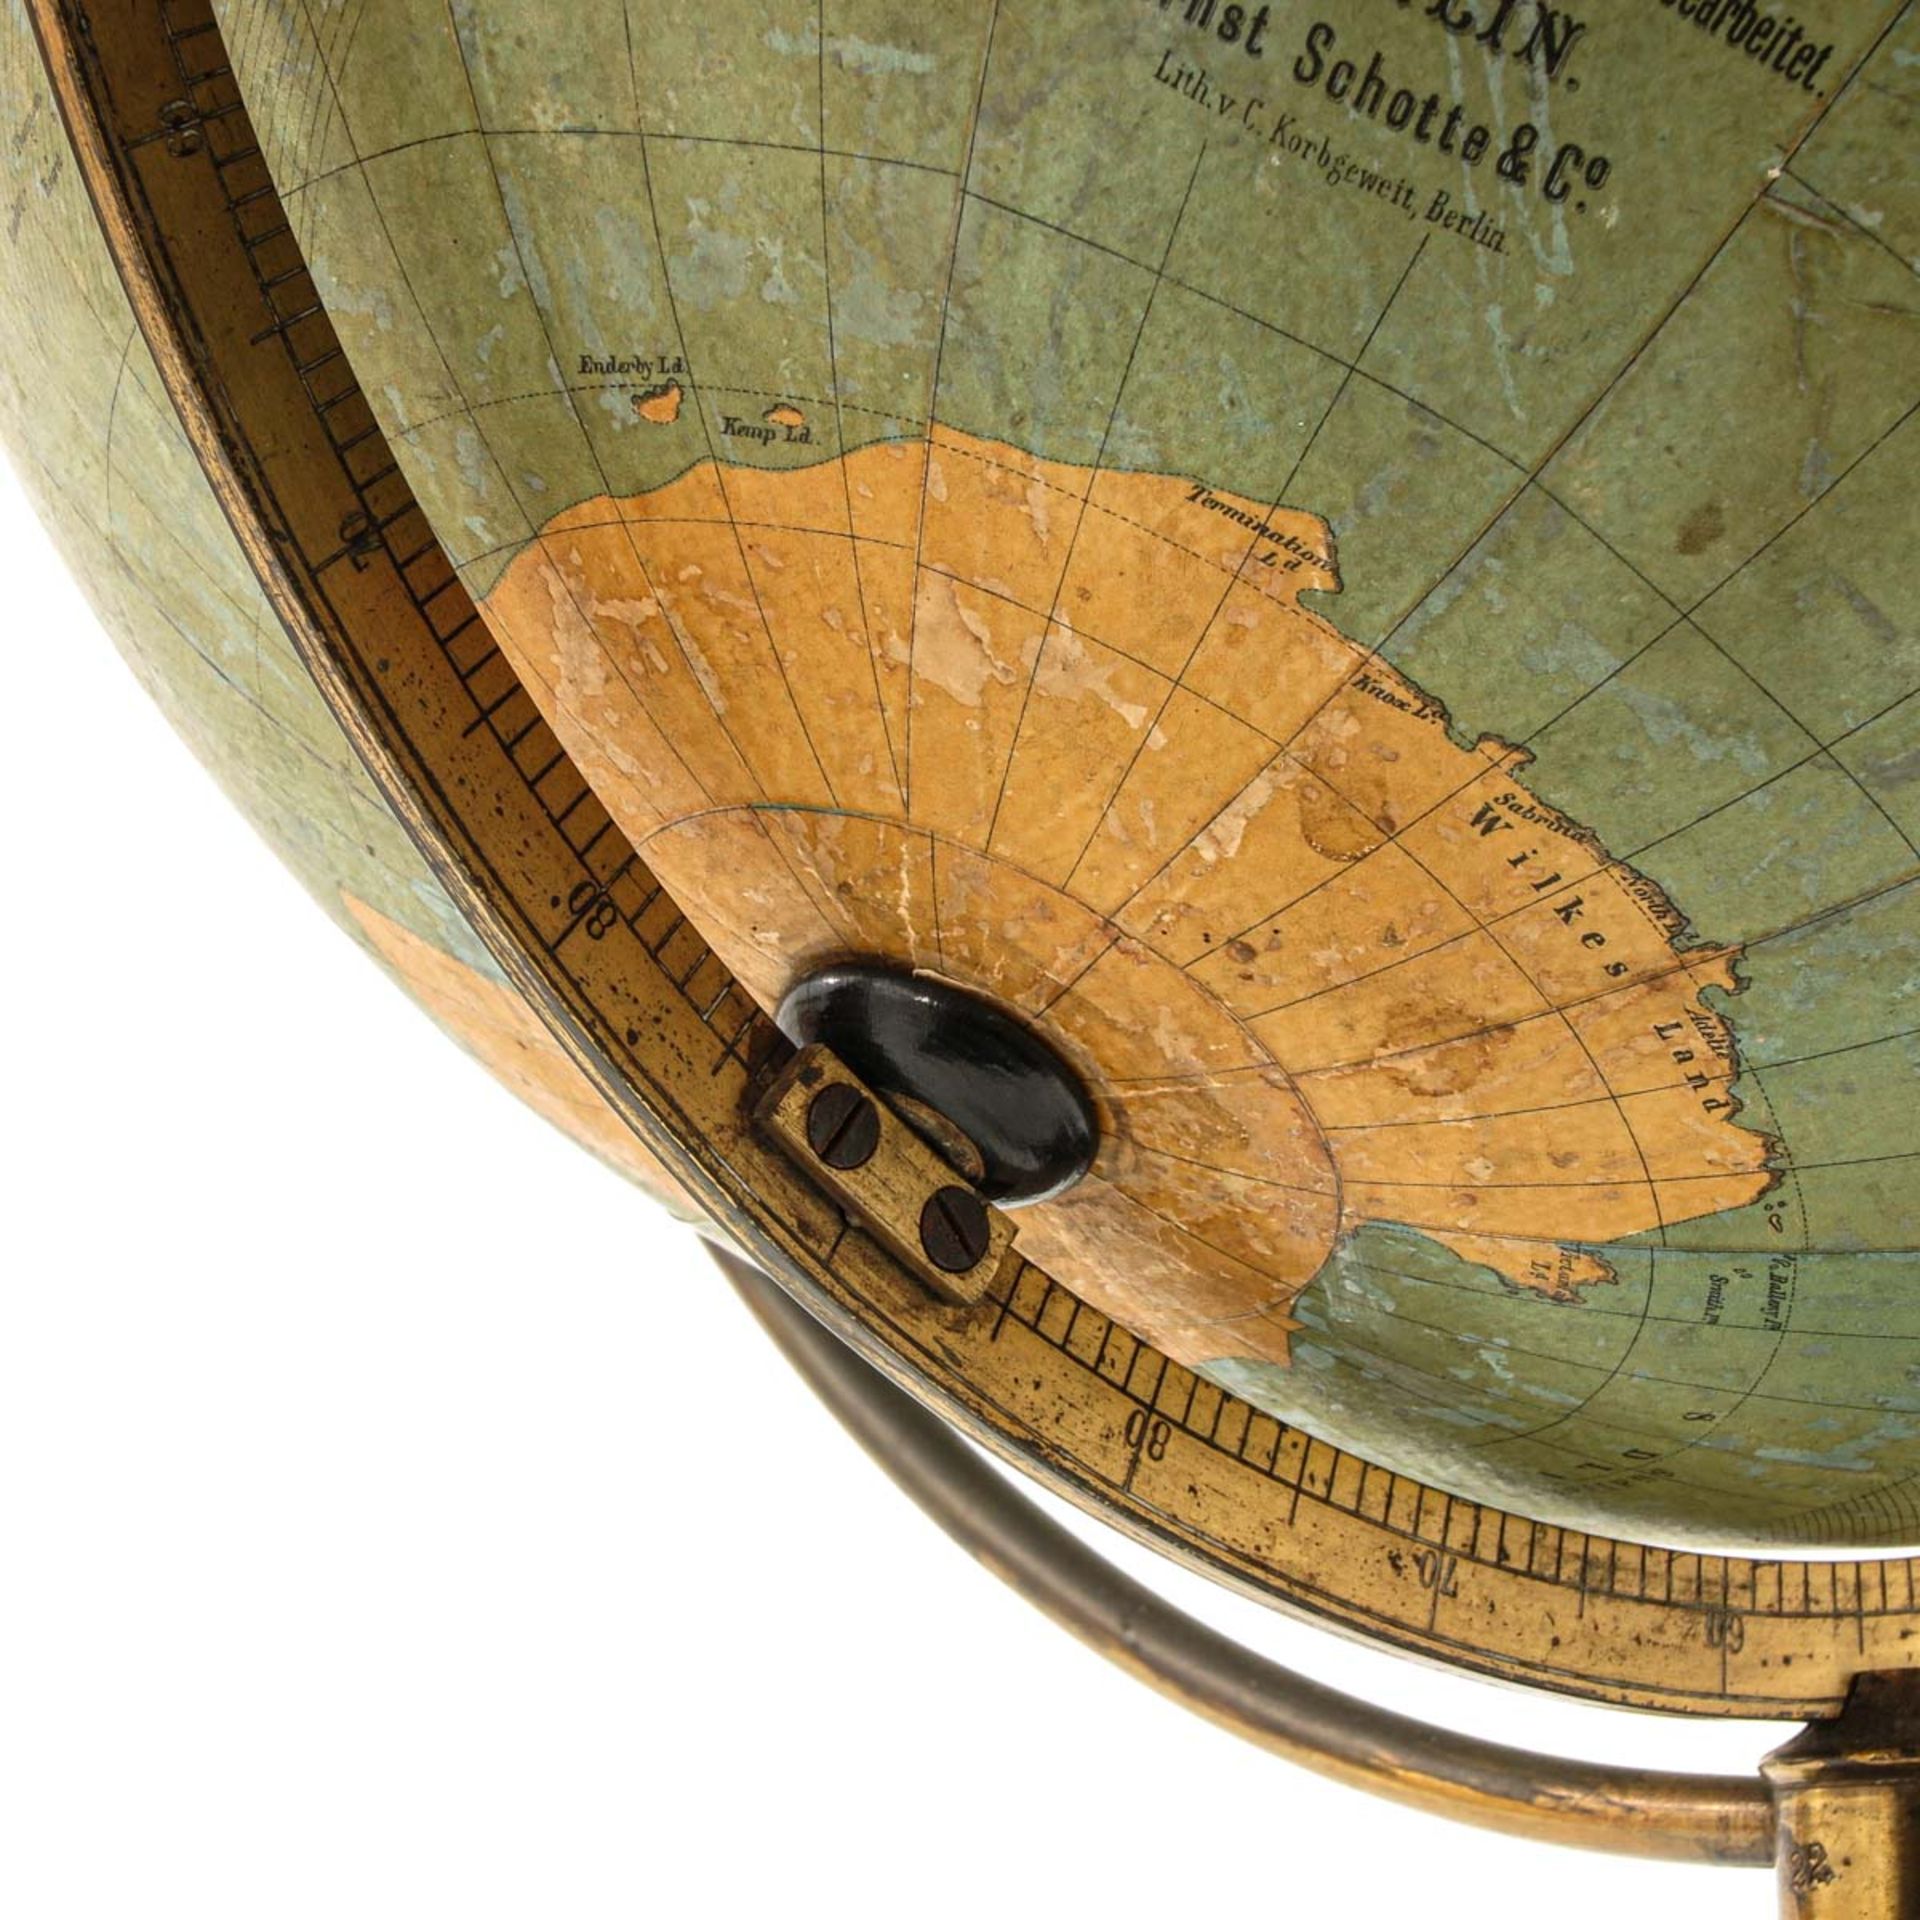 An Ernst Schotte & Co. Globe - Image 8 of 10